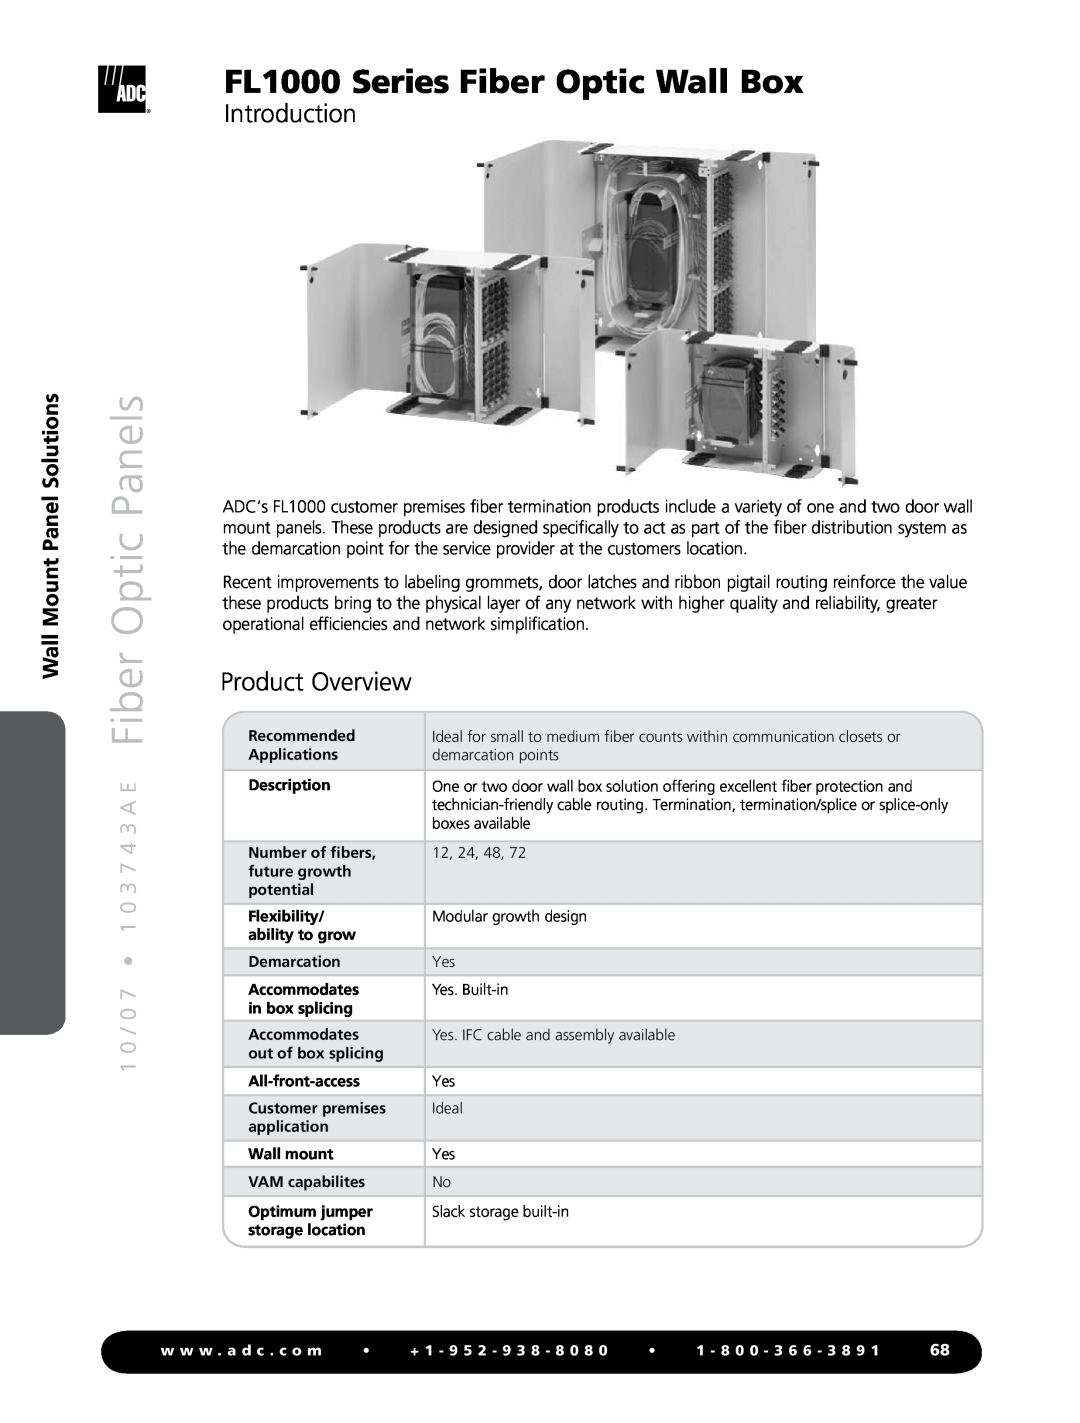 ADC manual Fiber Optic Panels, FL1000 Series Fiber Optic Wall Box, Introduction, Product Overview, 1 0 3 7 4 3 A E 